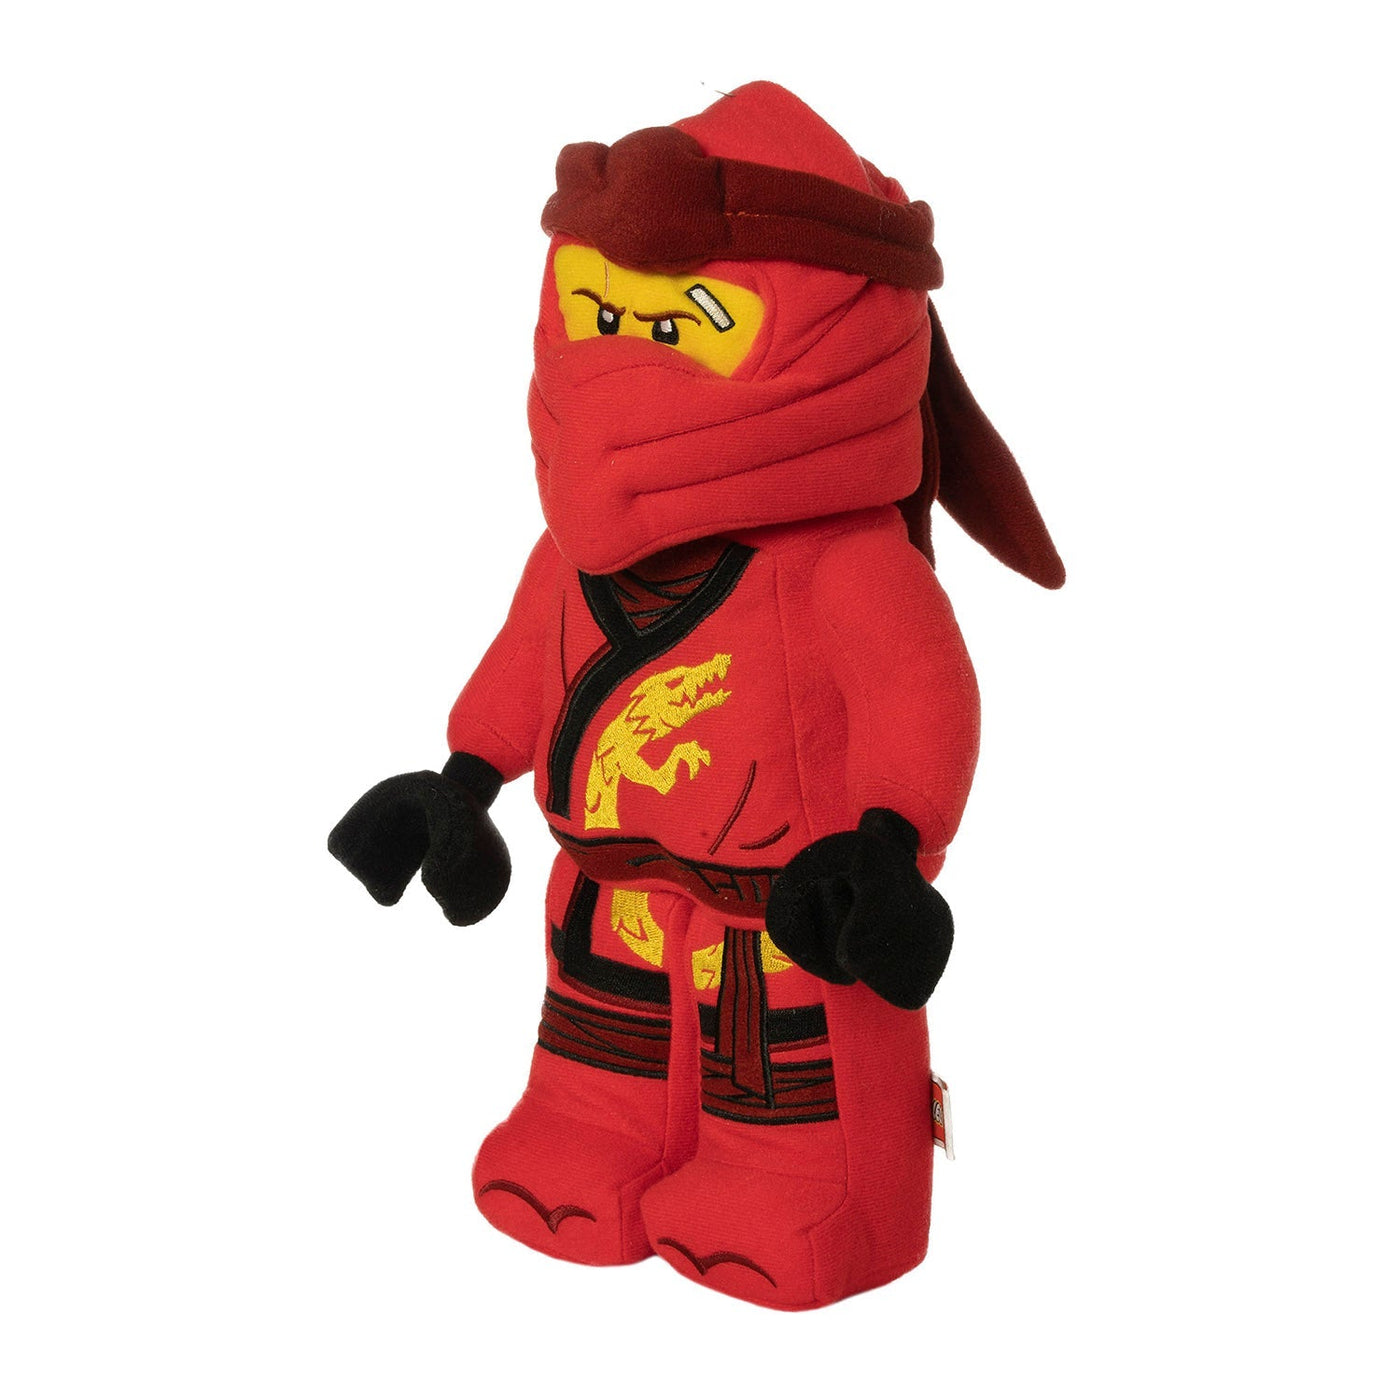 LEGO Ninjago Kai by Manhattan Toy